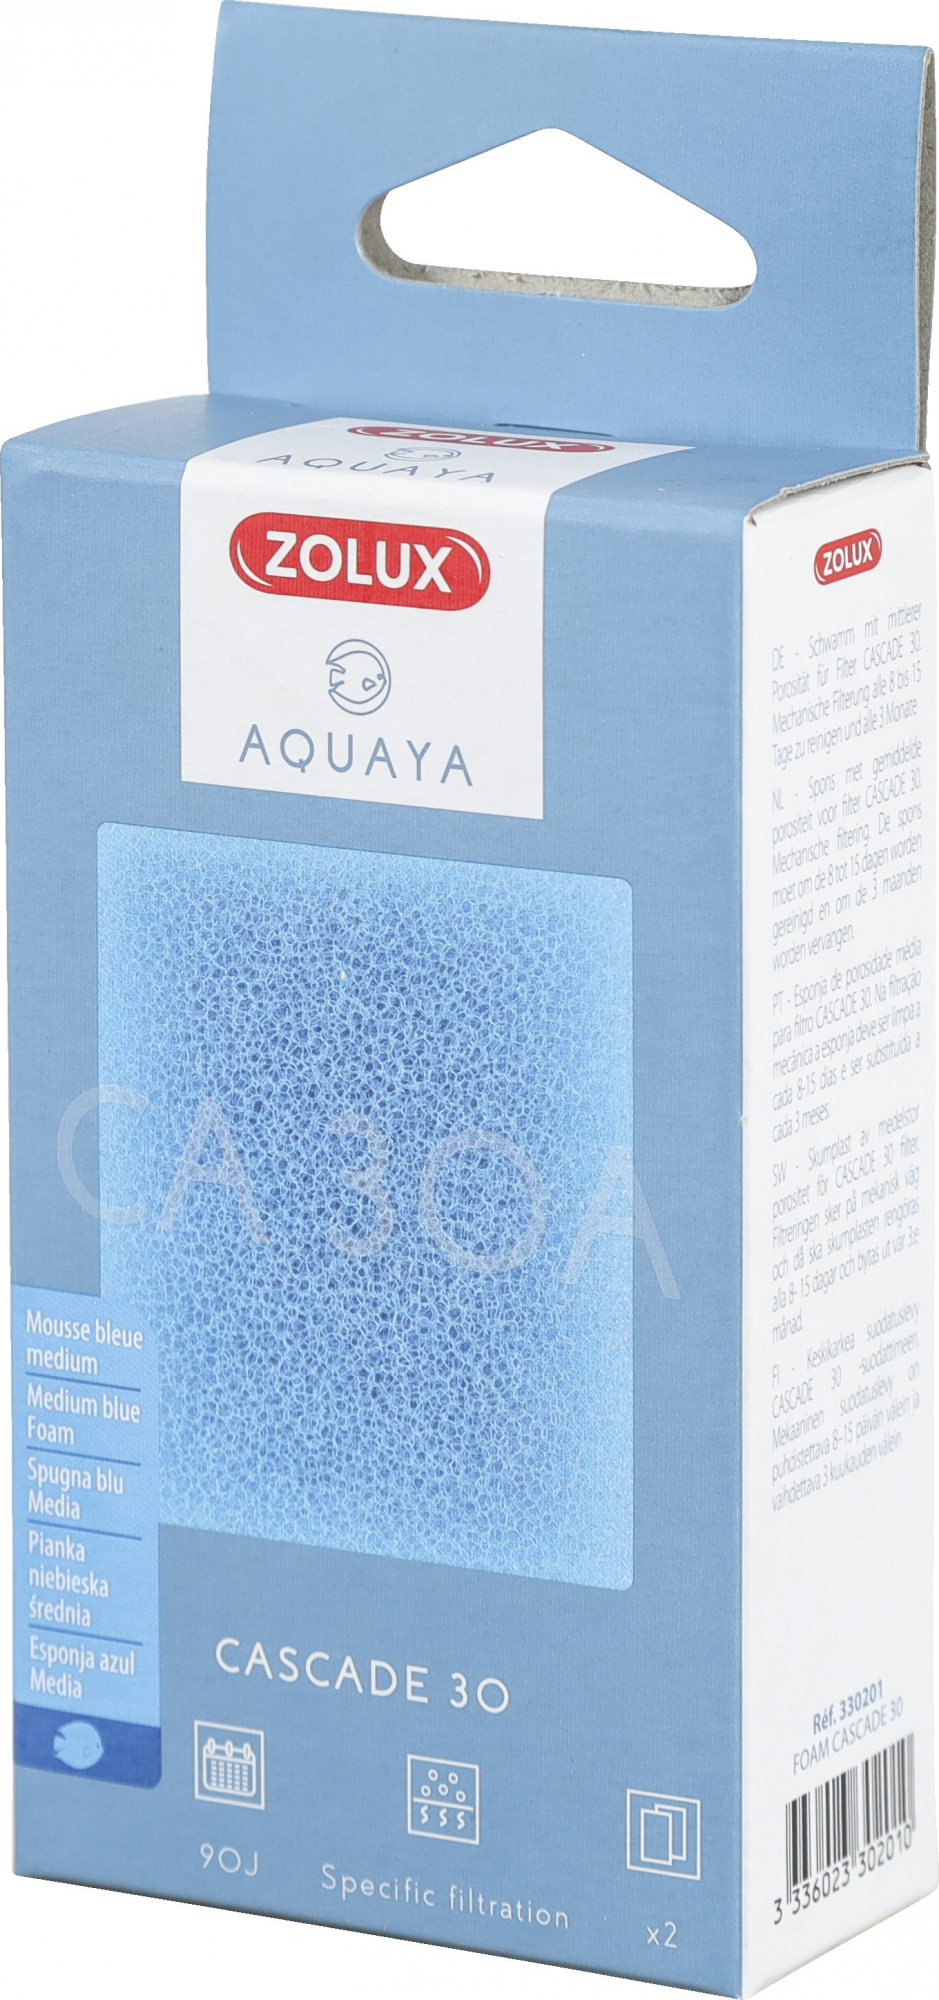 Blauer Schaum für Filter Cascade Aquaya